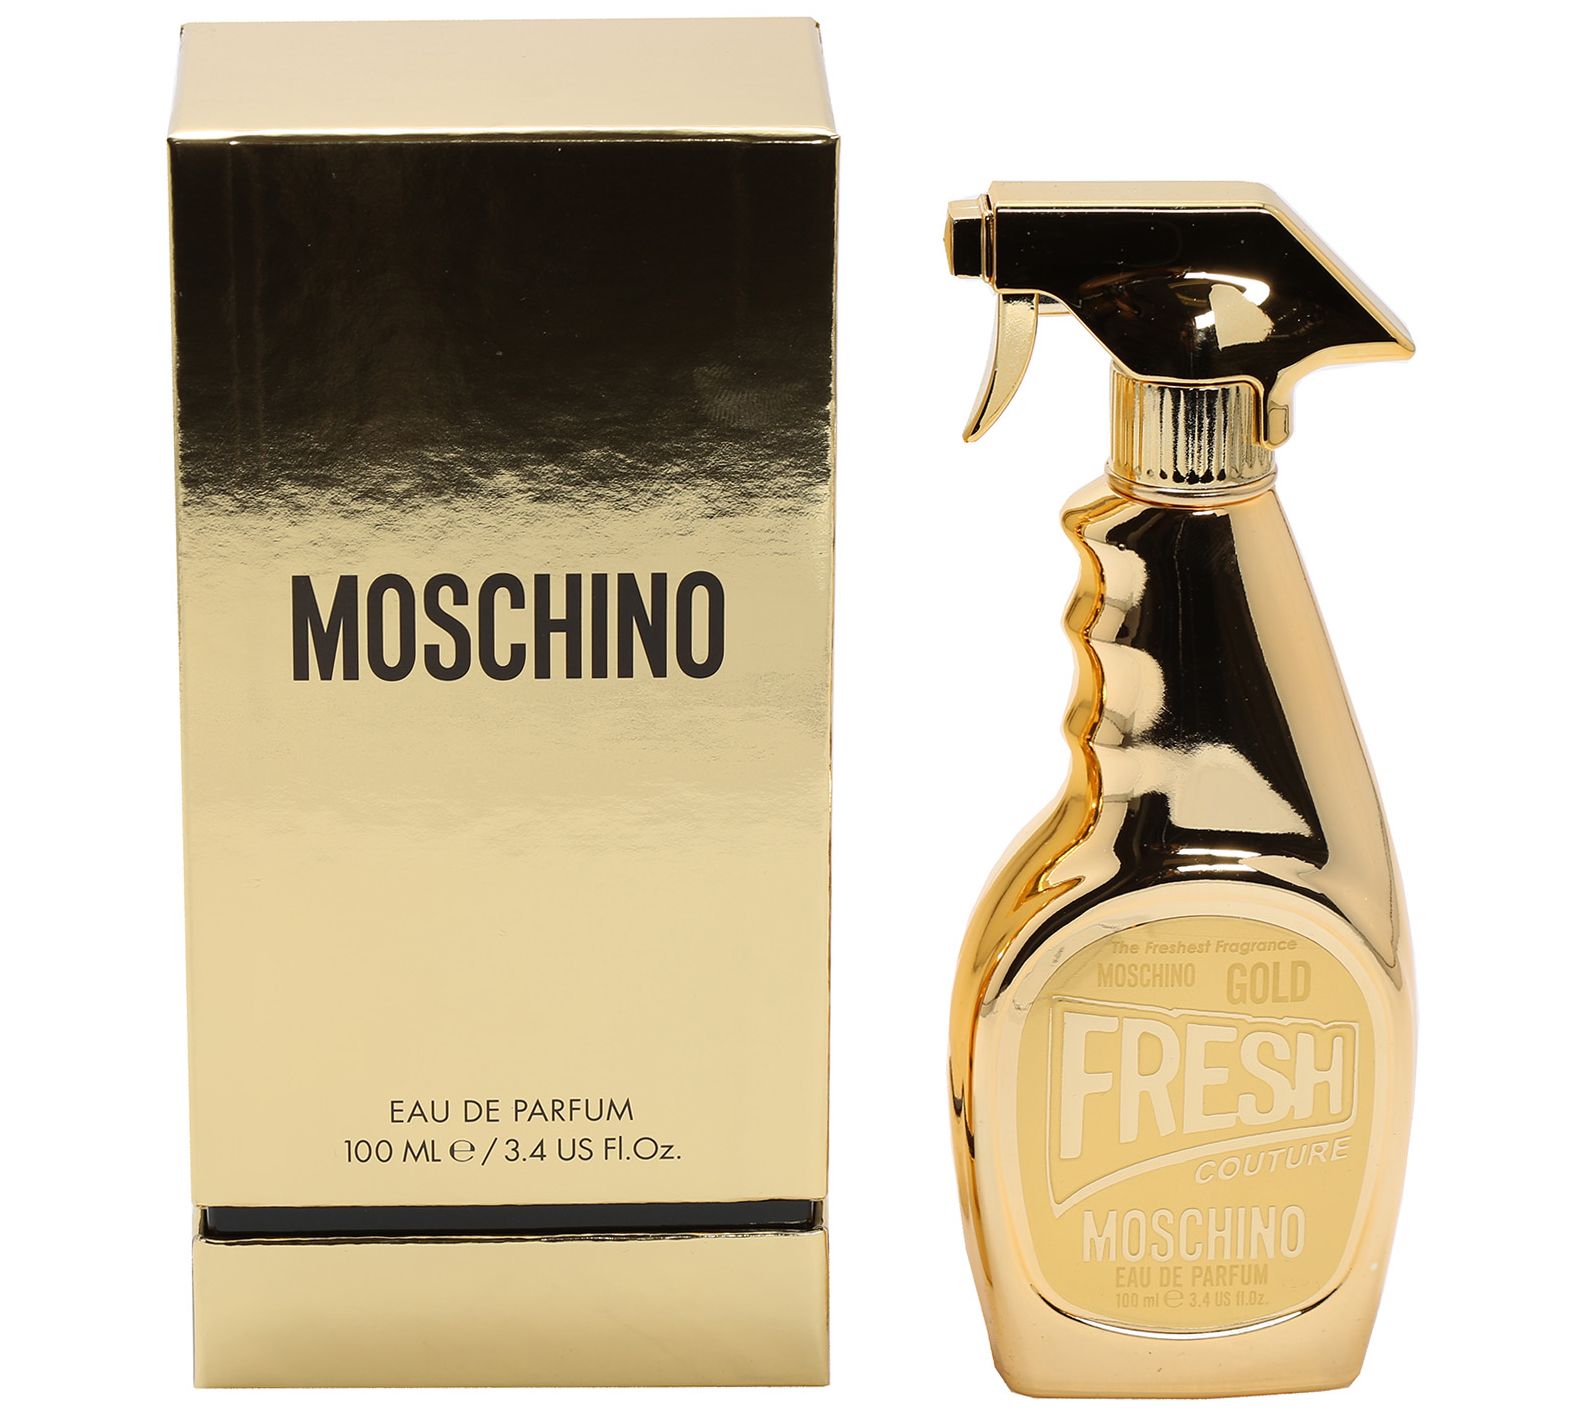 Moschino Gold Fresh Couture 30мл. Moschino Fresh Gold 100 мл. Moschino Gold Fresh аромат. Голд Москино женские.